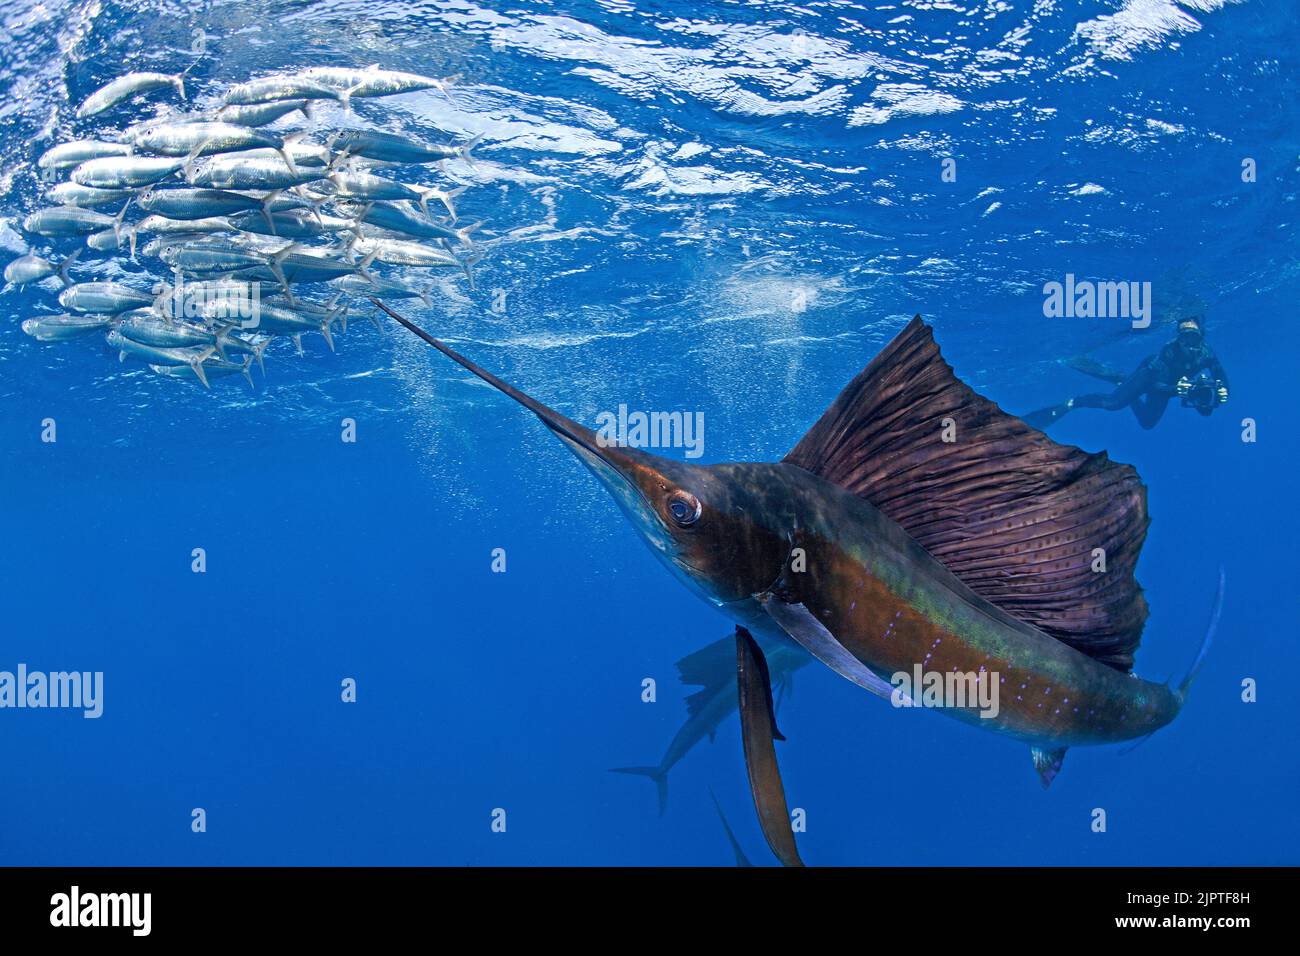 Atlantic Sailfish (Istiophorus albicans), hunting for Sardinas (Sardina pilchardus), Isla Mujeres, Yucatan Peninsula, Caribbean Sea, Mexico Stock Photo